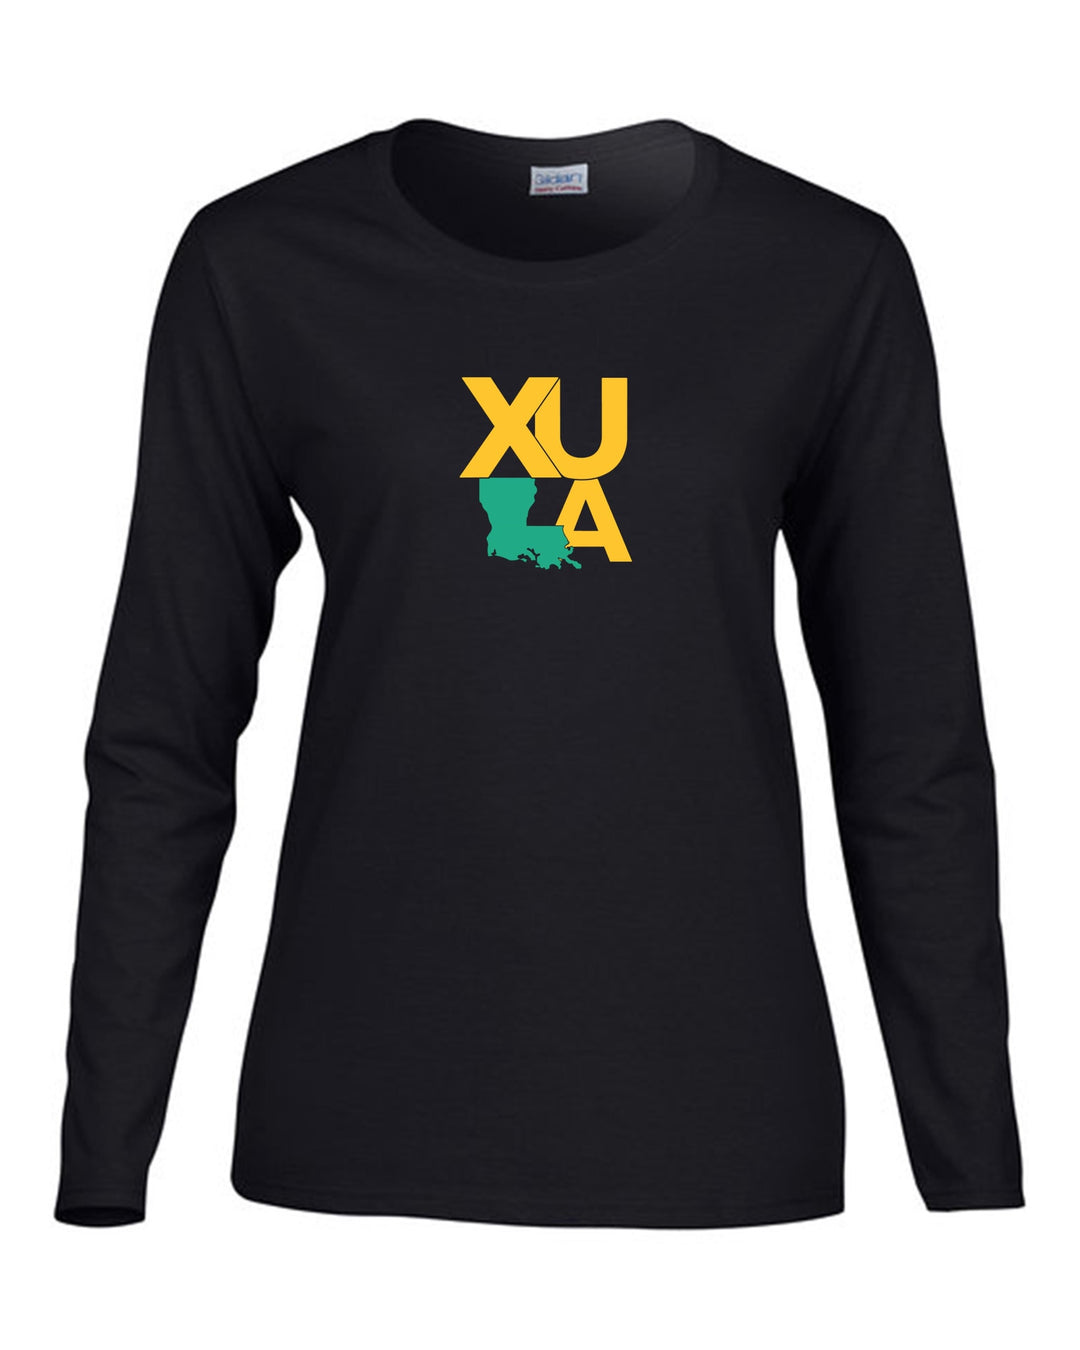 XULA Long-Sleeve Performance Shirt Xavier University Black Womens Small - Third Coast Soccer